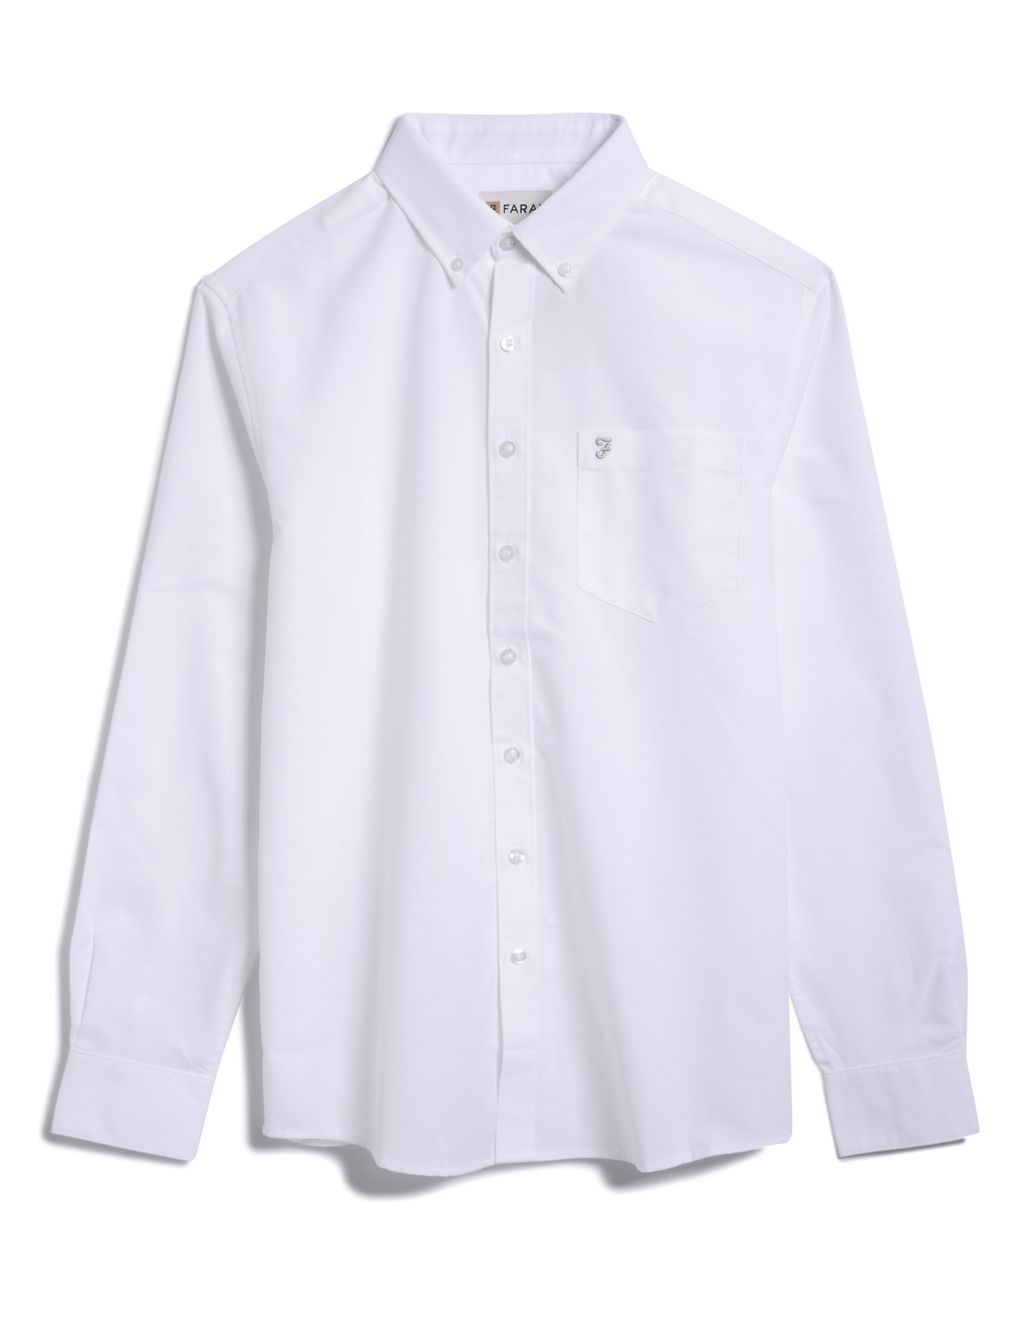 Cotton Blend Oxford Shirt | Farah | M&S